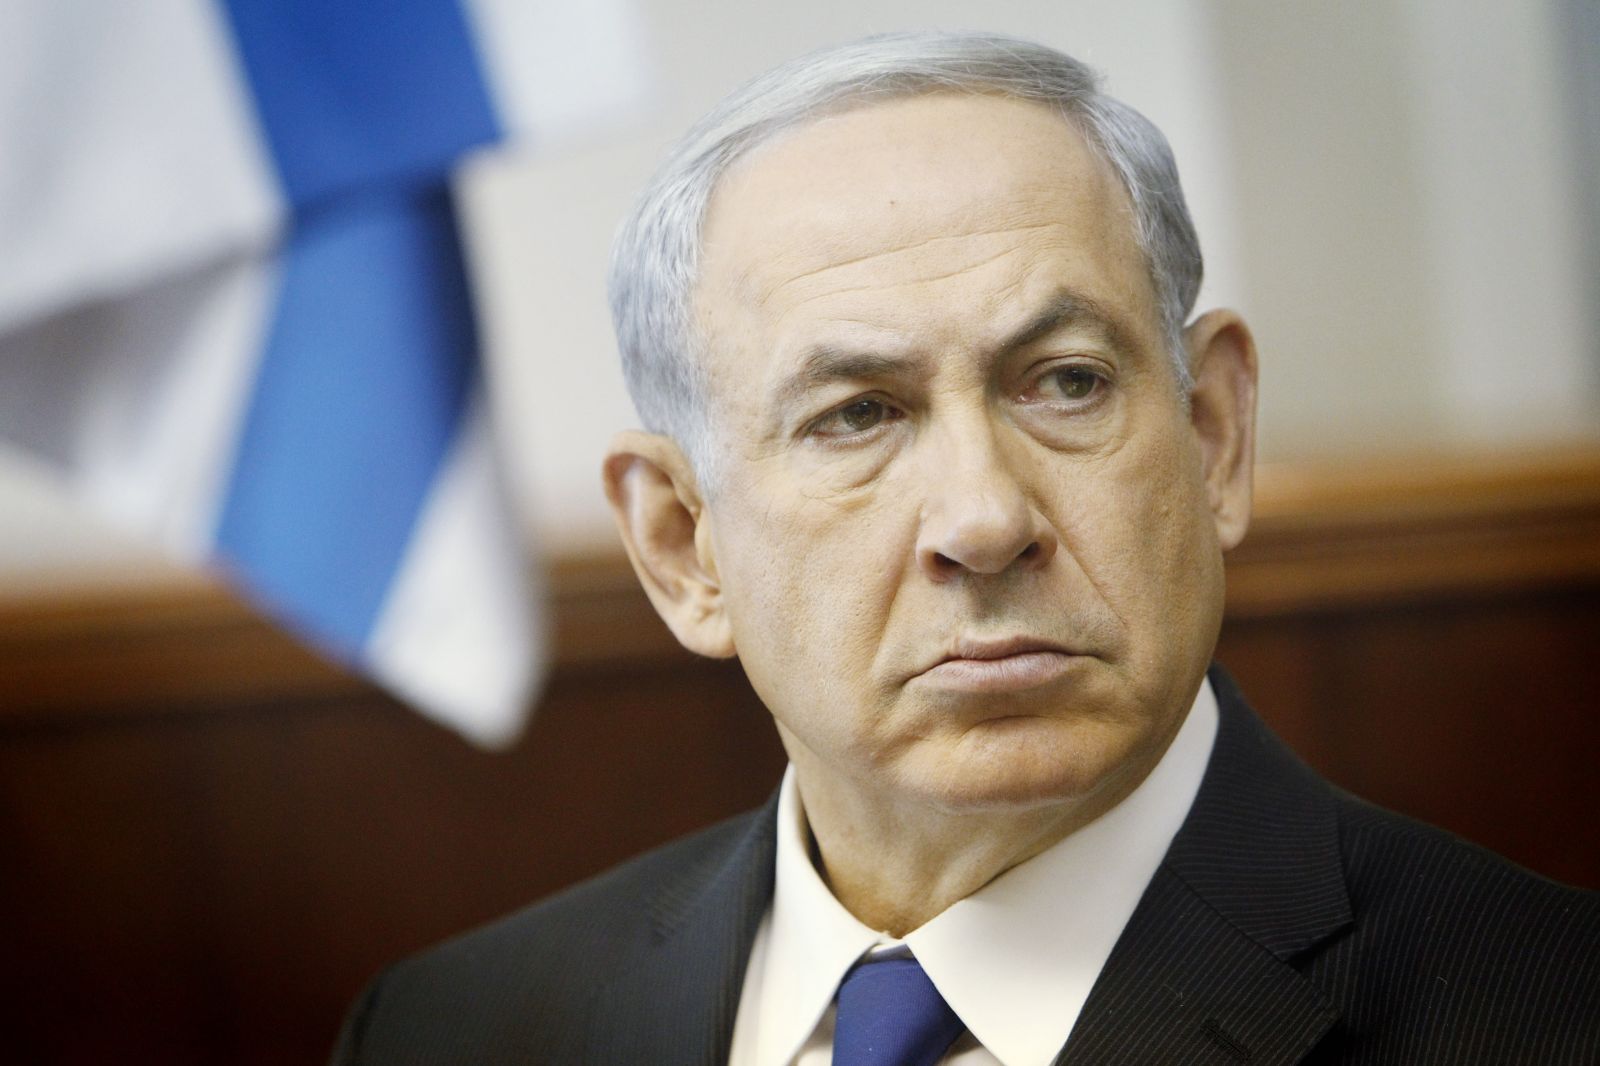 Netanyahu speech interrupted as rockets fired at southern Israel